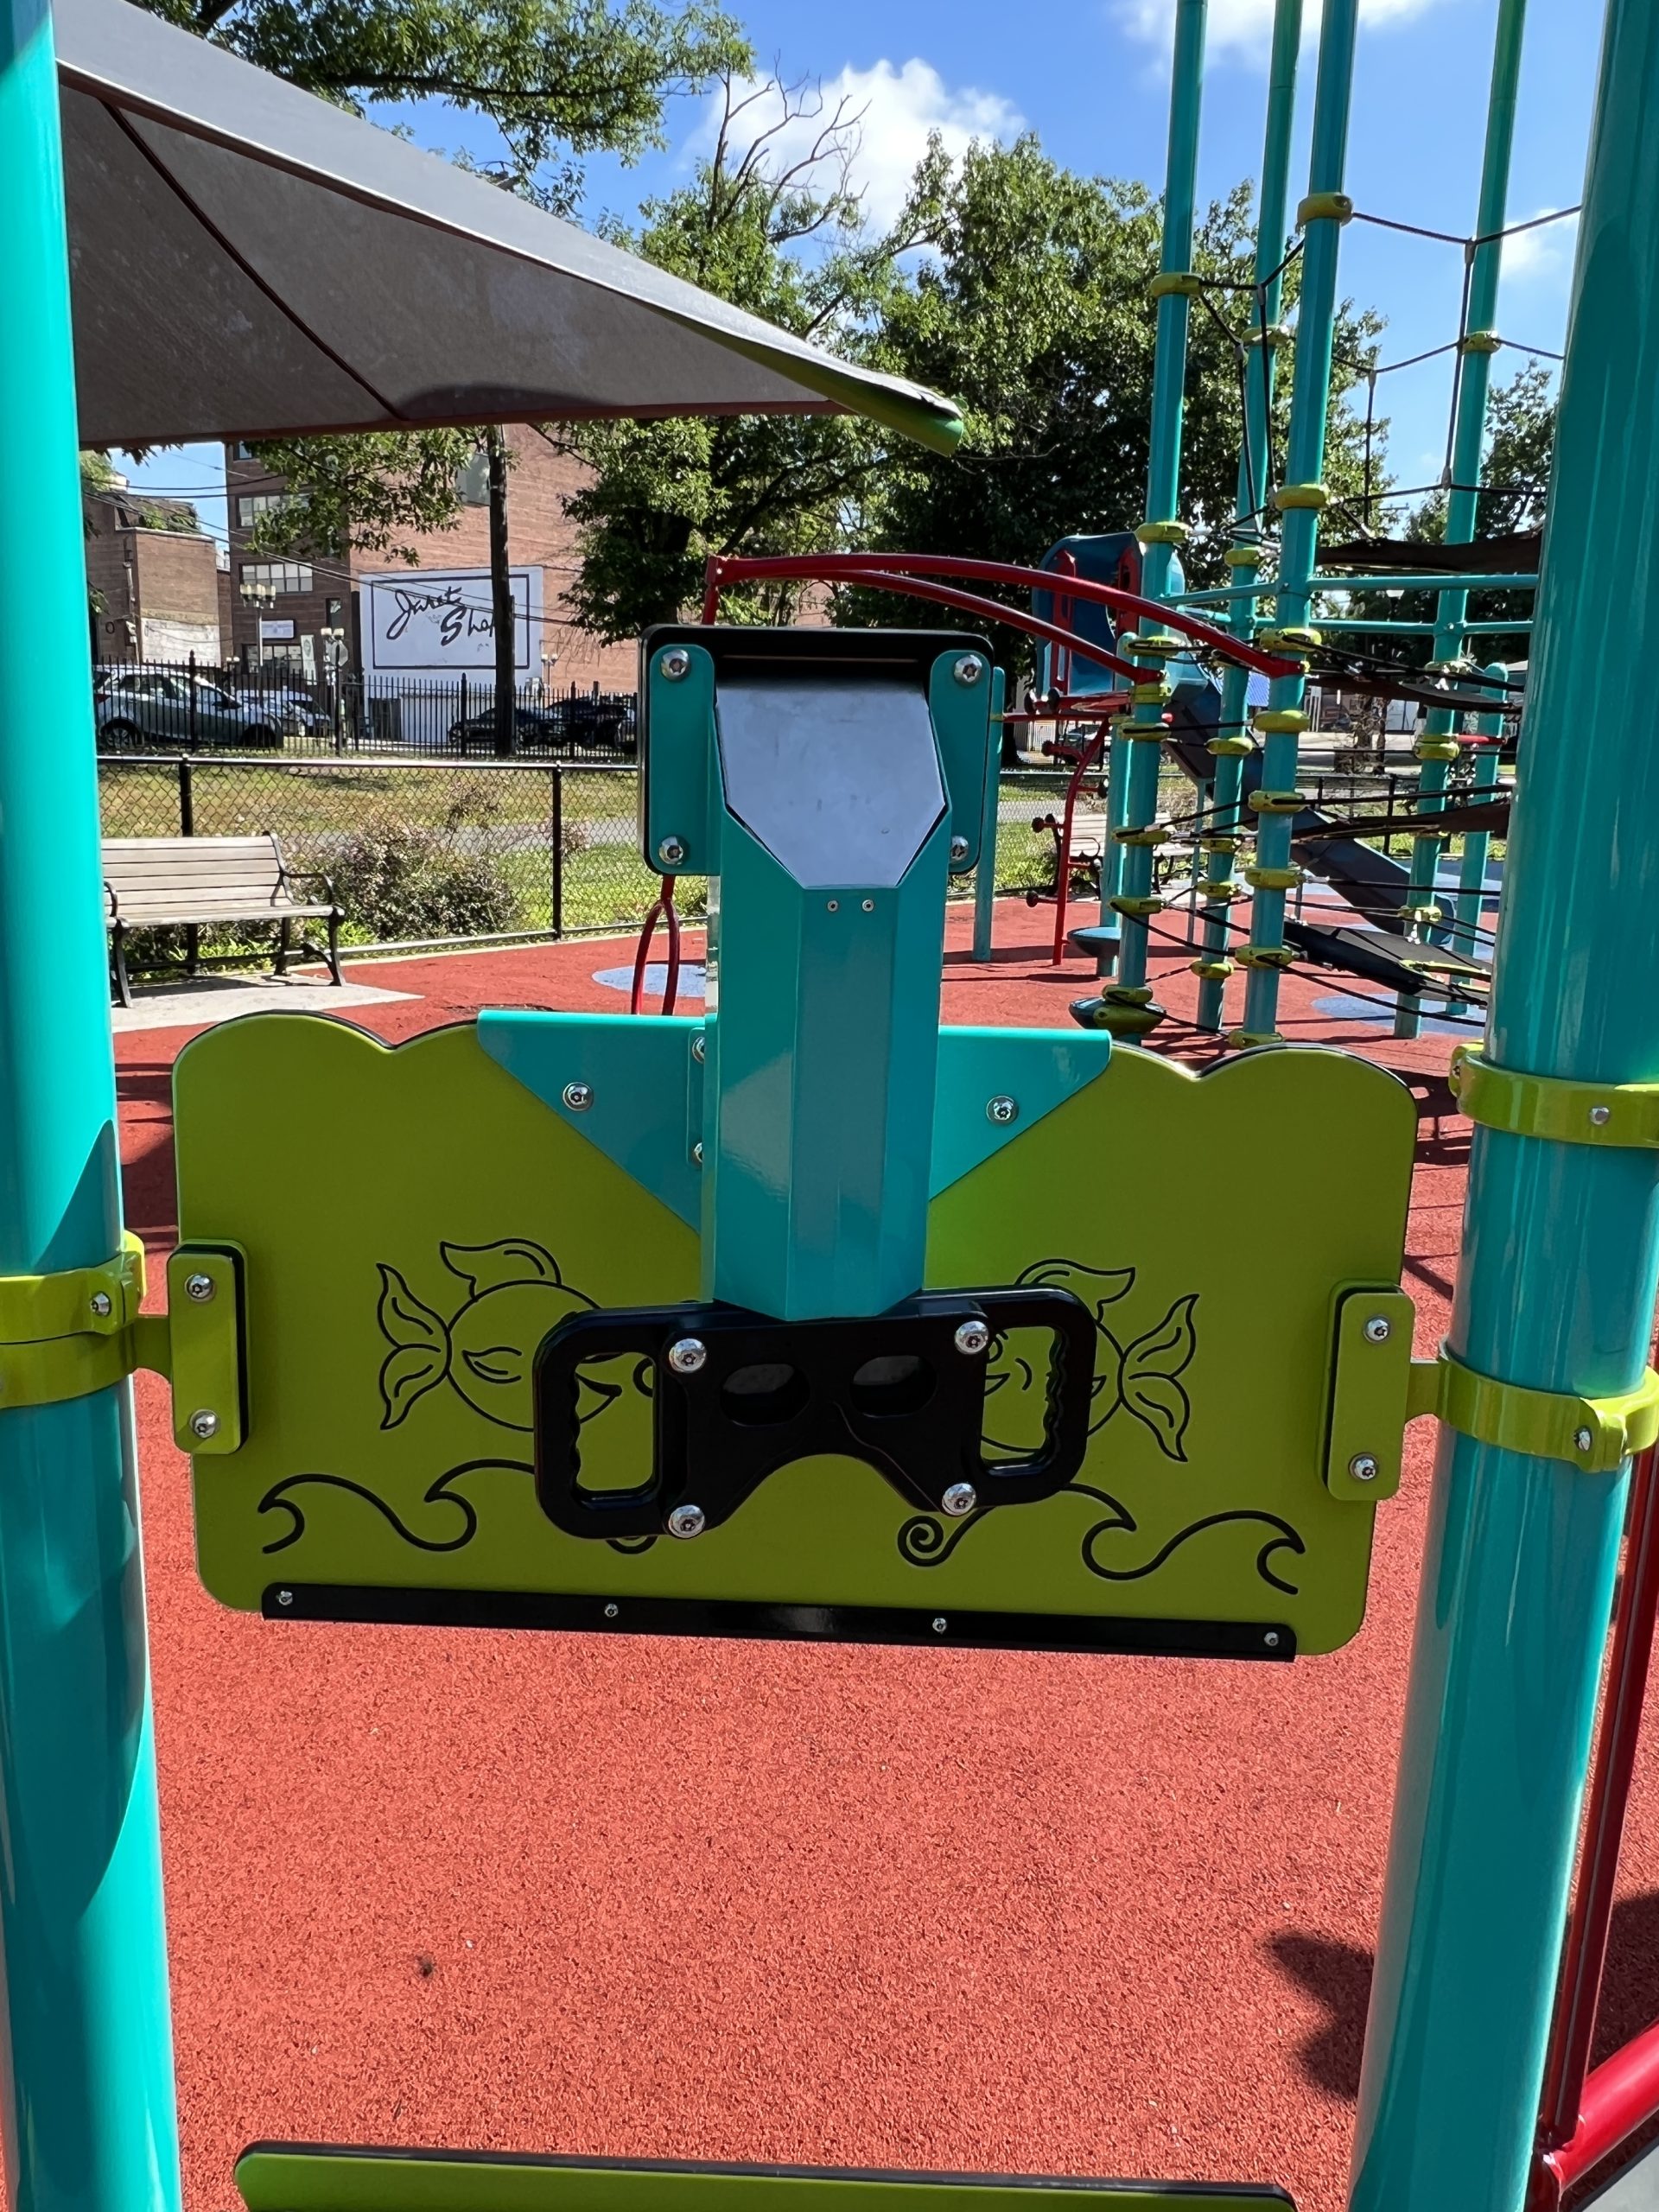 Watsessing Park Playground in Bloomfield NJ periscope